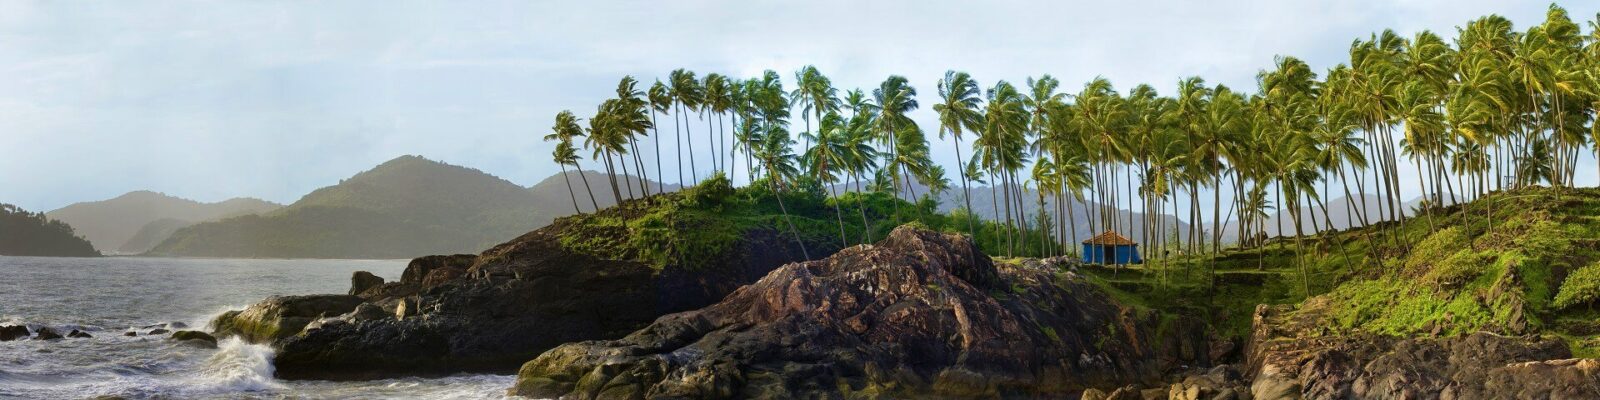 Why Goa? 5 reasons to explore India’s beach paradise